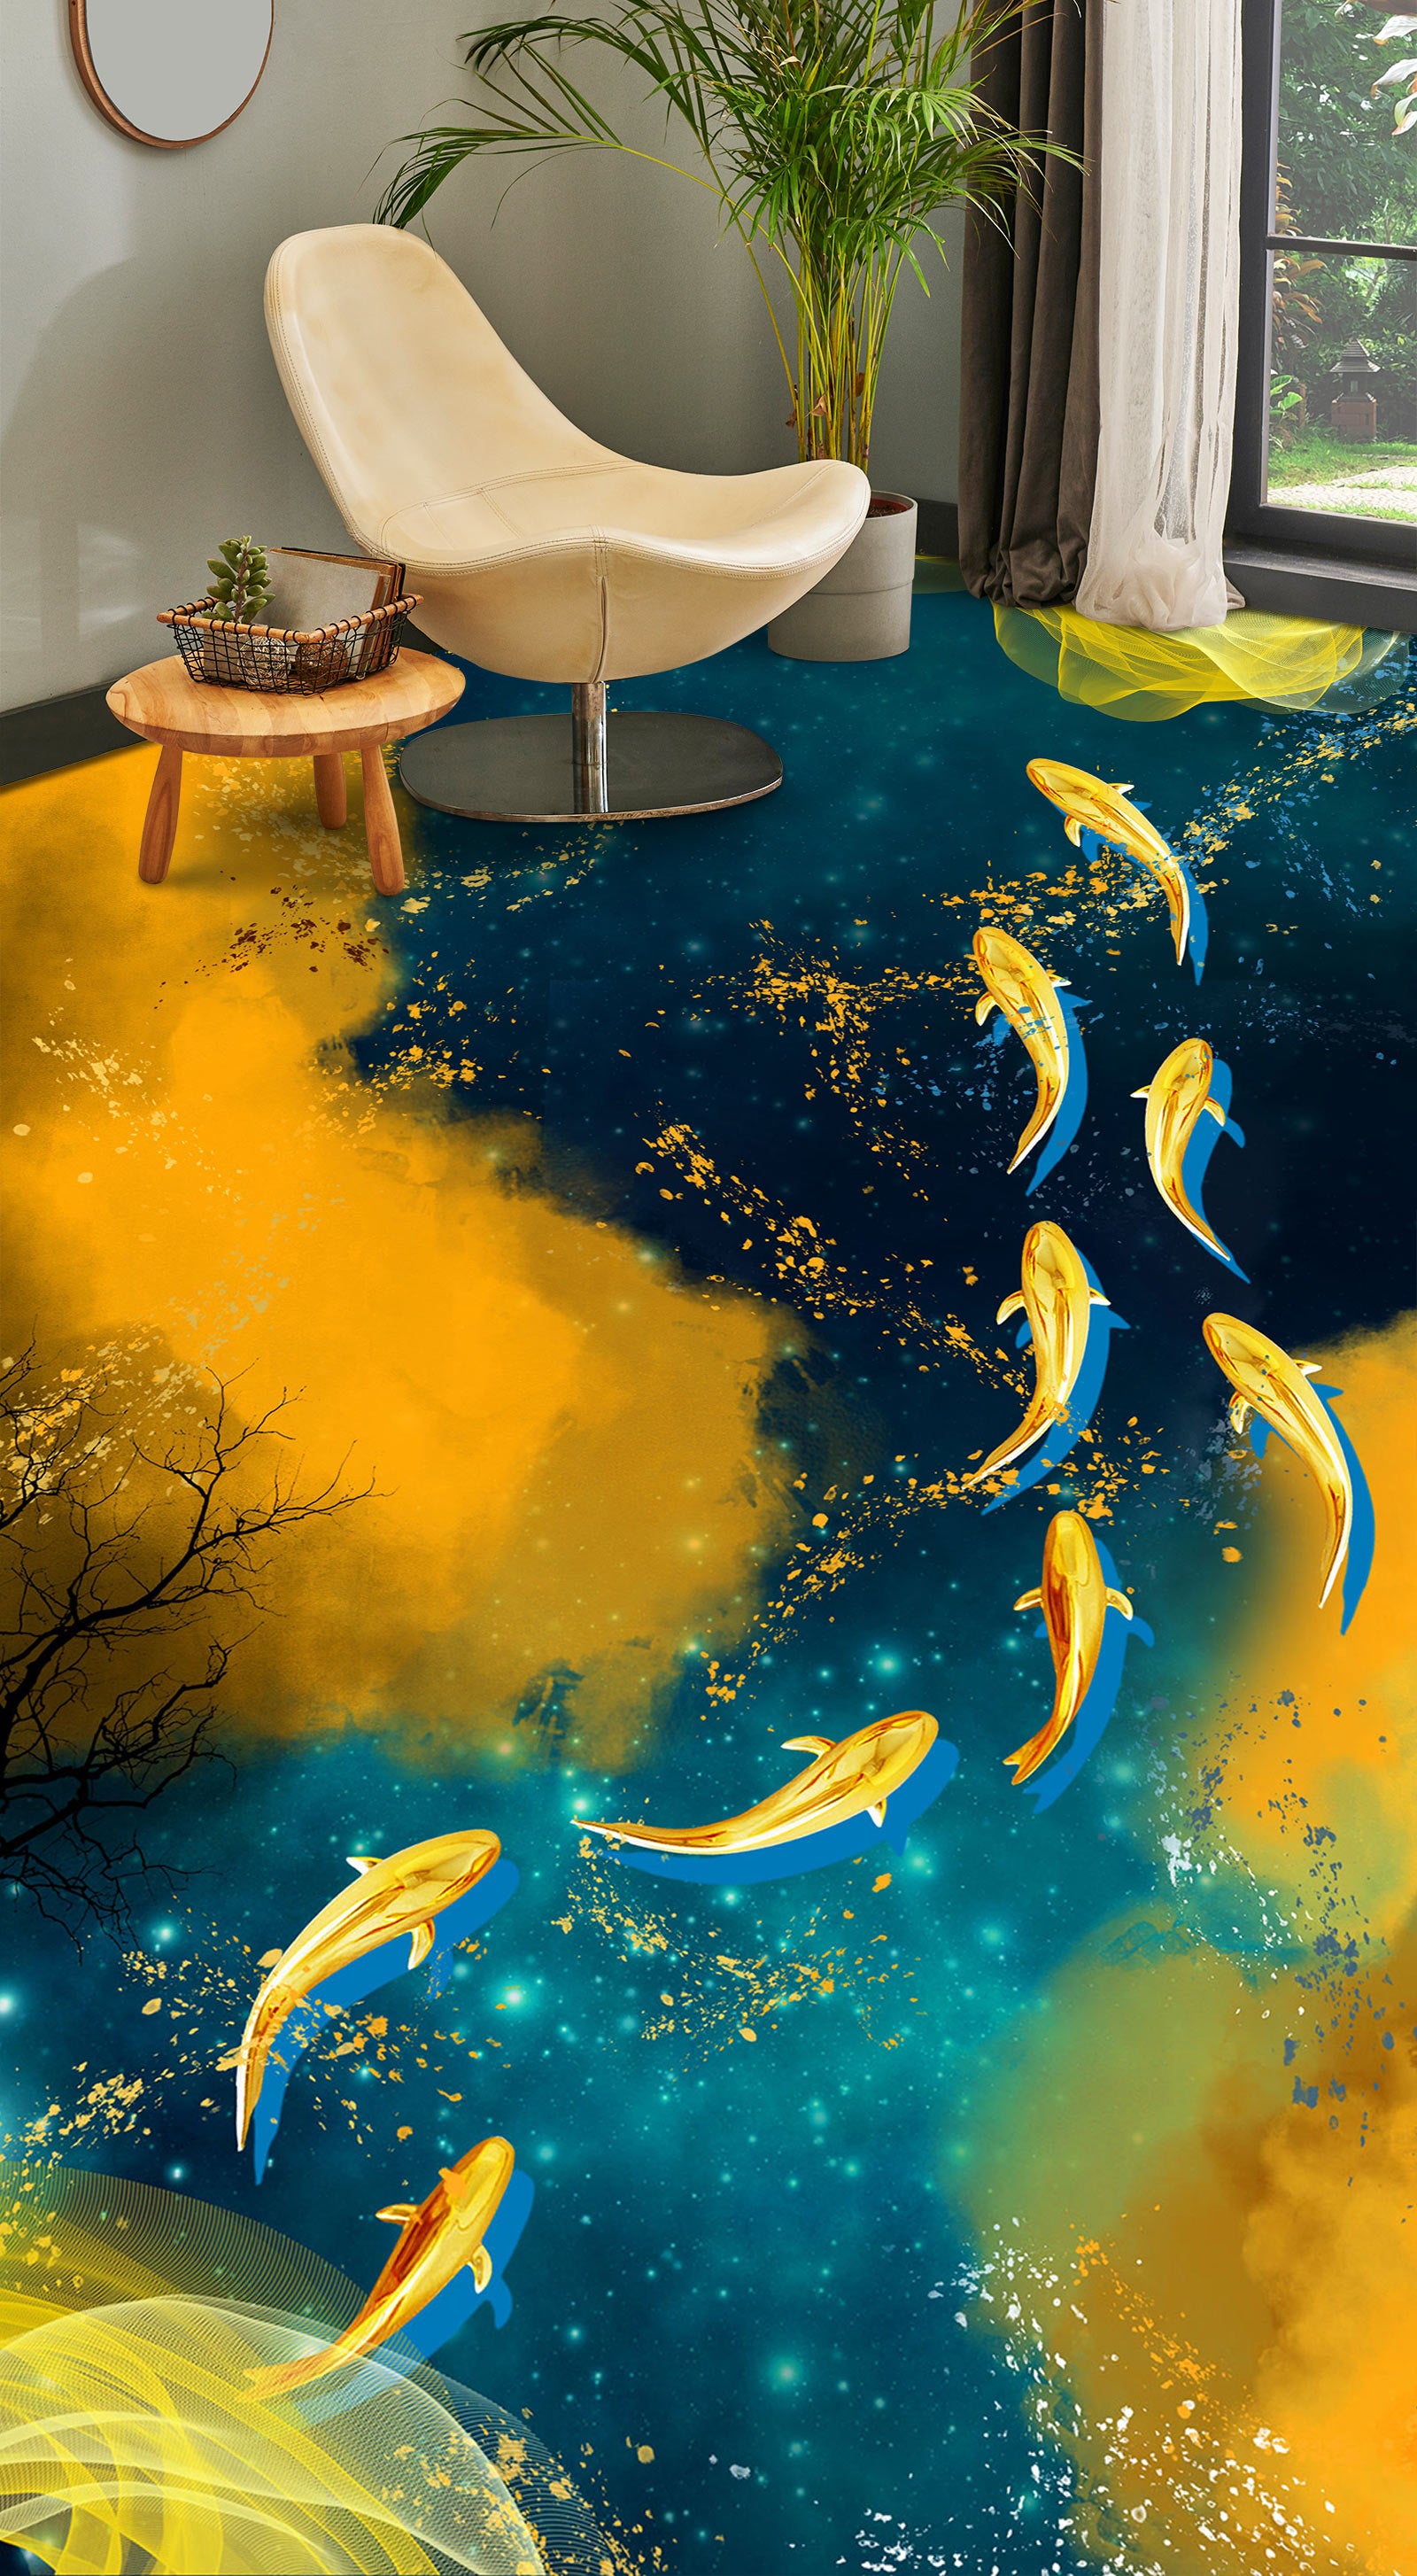 3D Noble Golden Fish 1202 Floor Mural  Wallpaper Murals Self-Adhesive Removable Print Epoxy